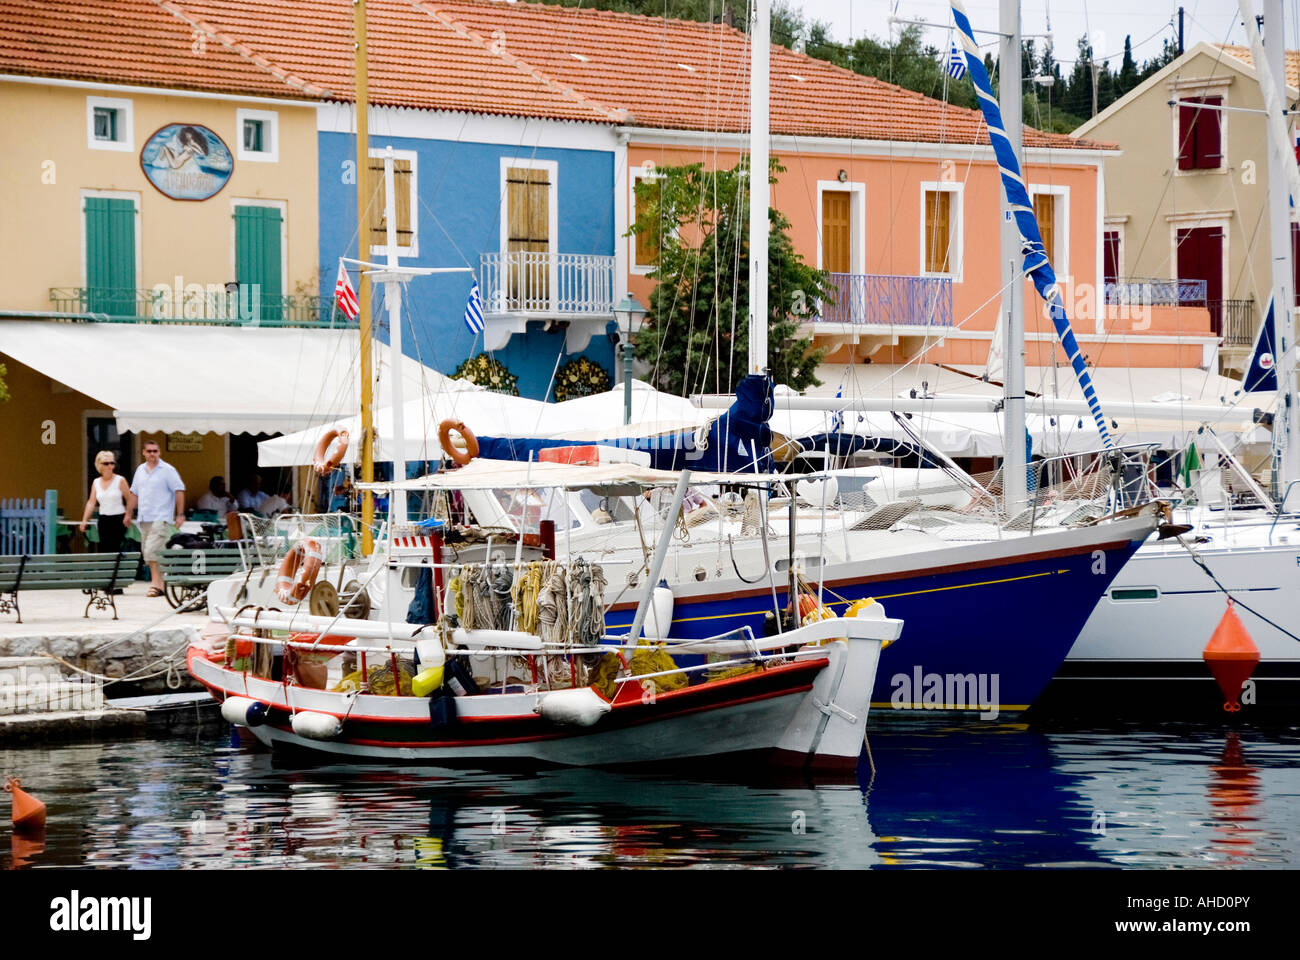 Hafen, Fiskardo, Kefalonia, Ionische Inseln Griechenland. Stockfoto